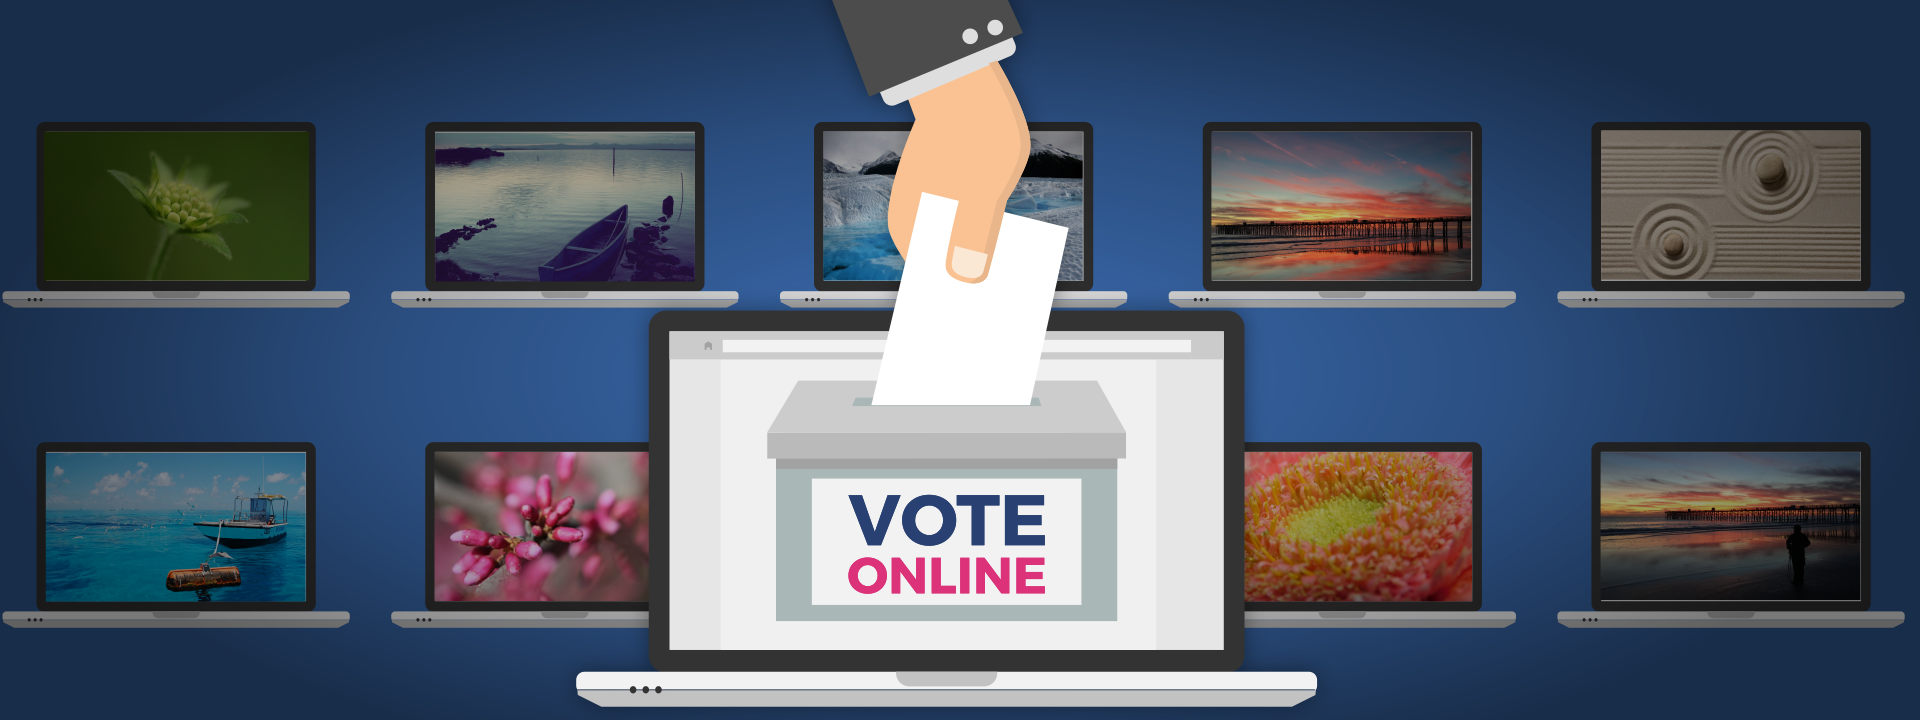 Vote PNG HD Free - 138885